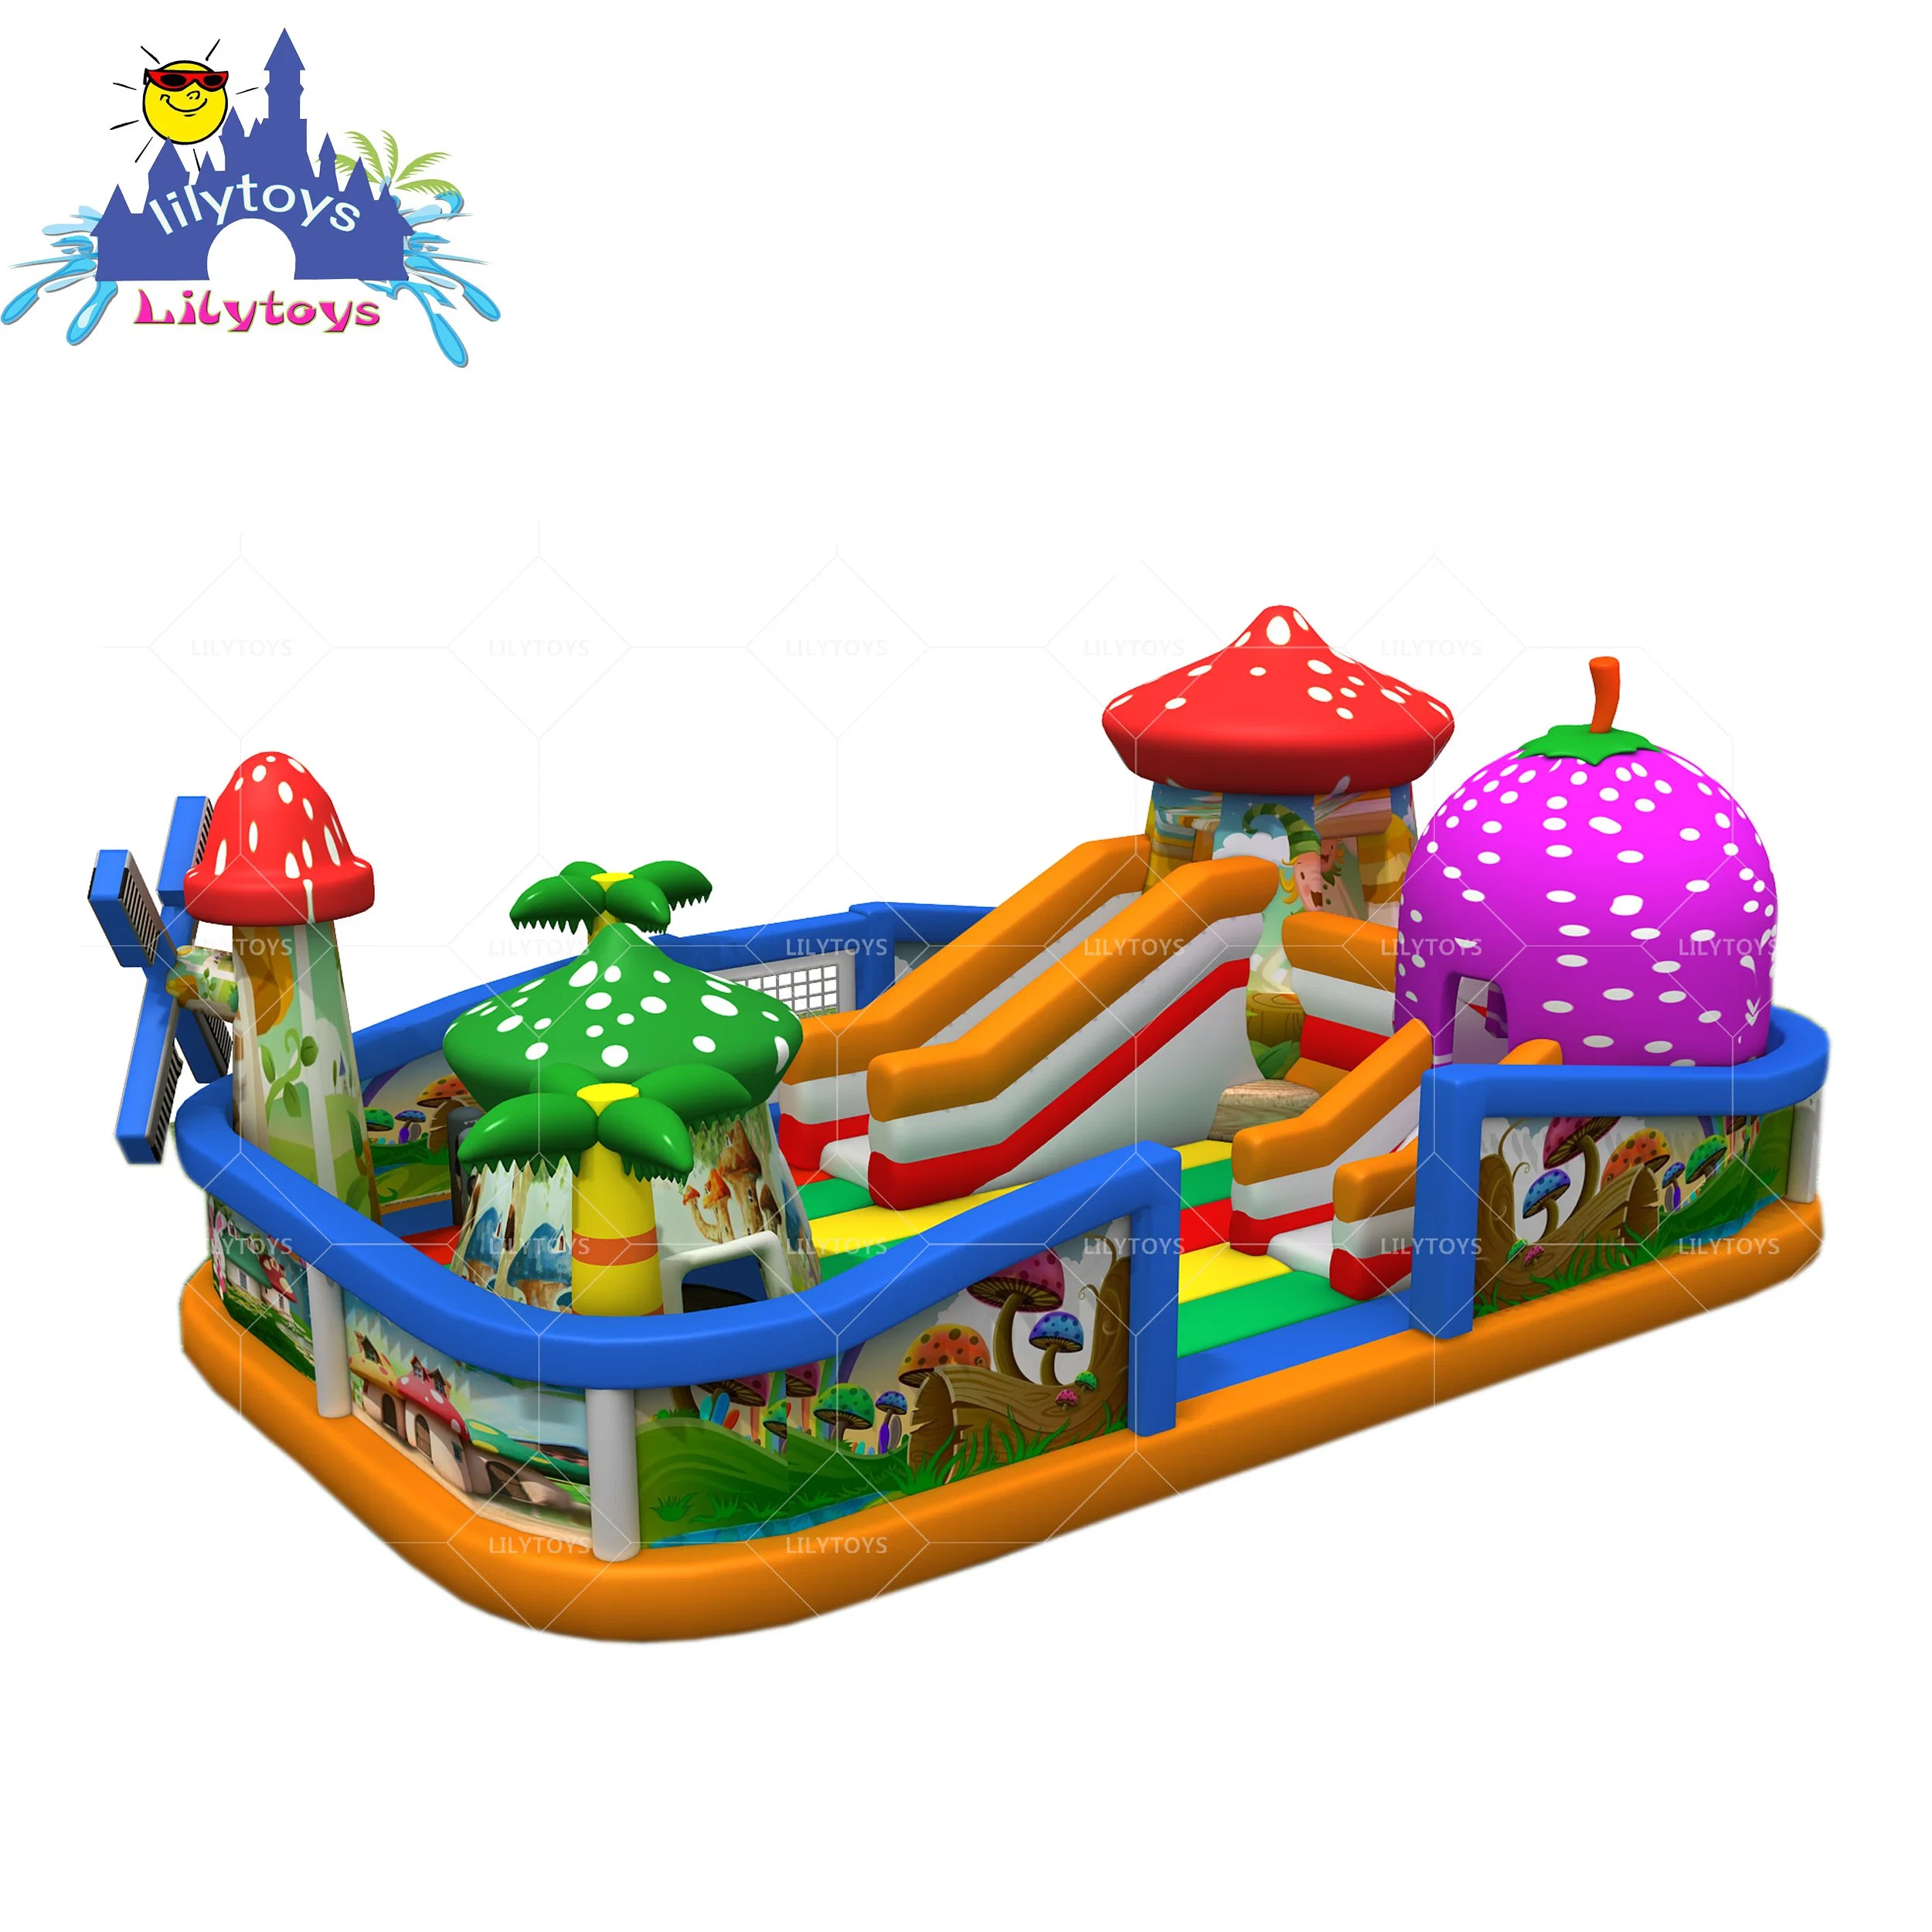 Lilytoys Big Aufblasbare Vergnügungspark Trampolin Park Fun City Bouncer Spiele für Kinder